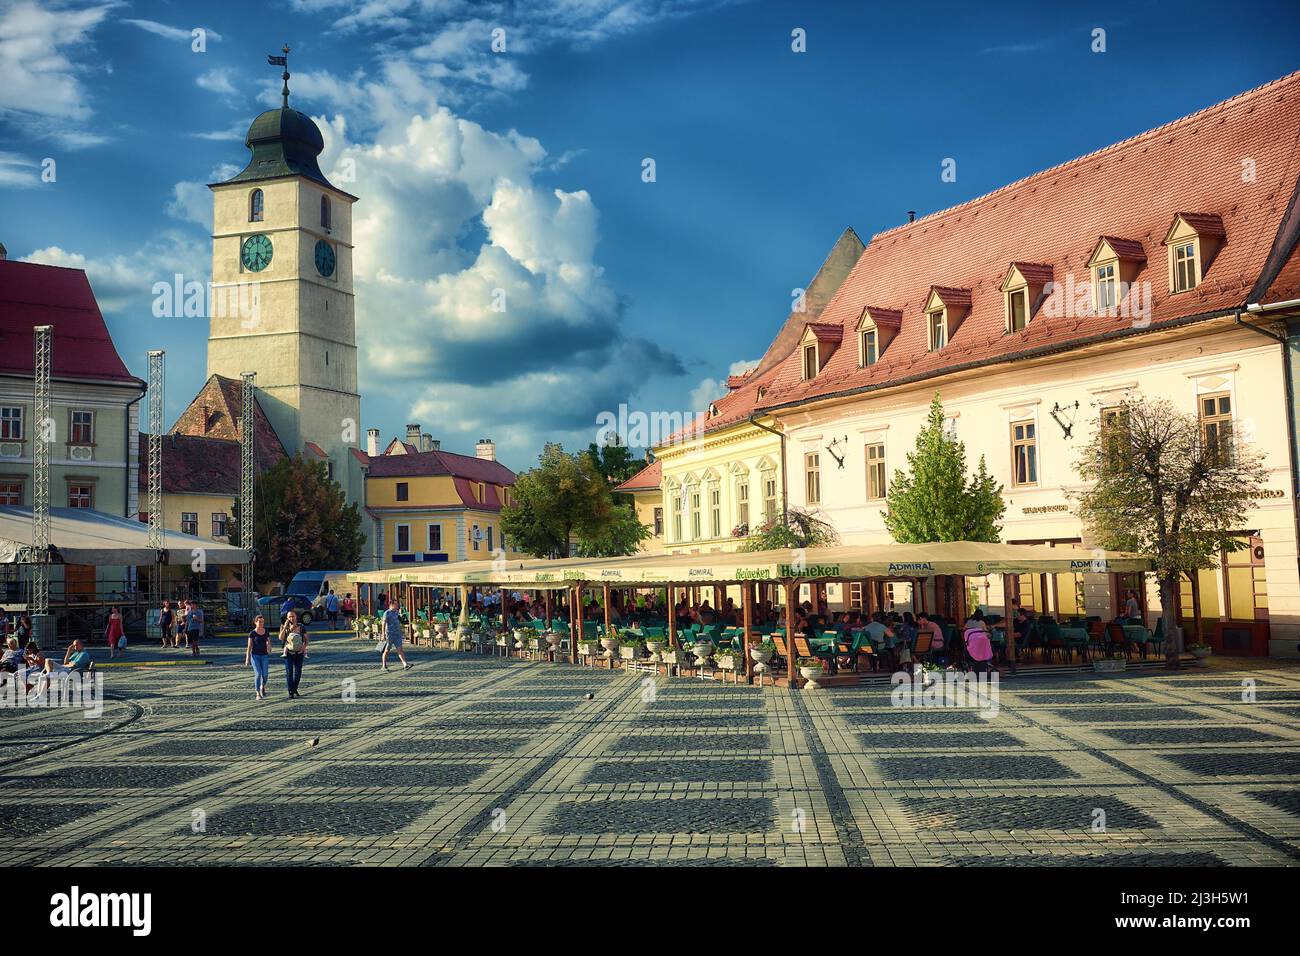 SIBIU, ROMANIA - July 30, 2018: Sibiu's Council Tower from Piata Mare square against dramatic sky Stock Photo